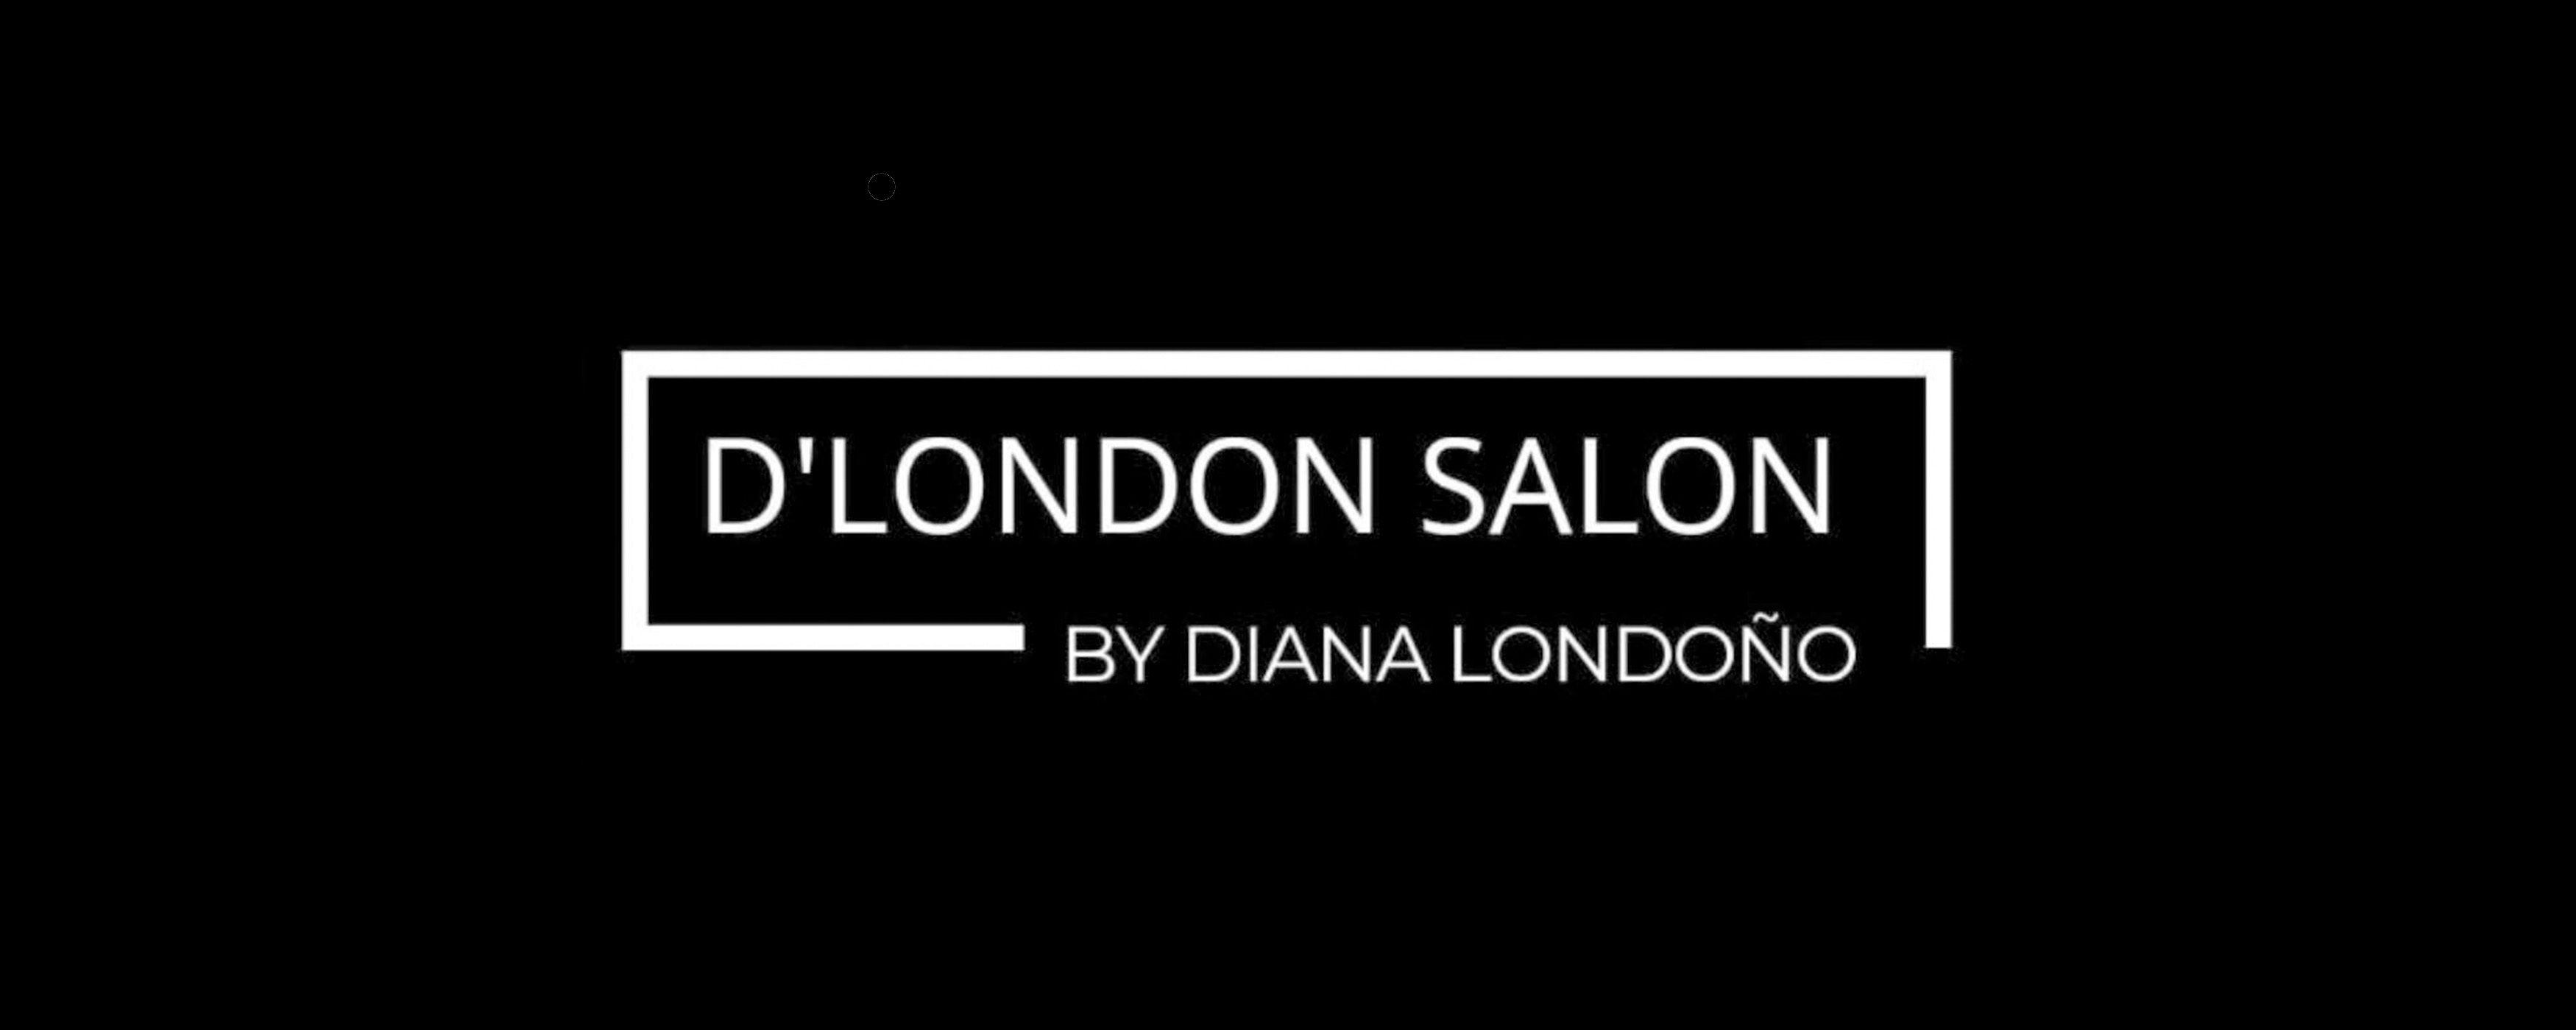 D'London Salon